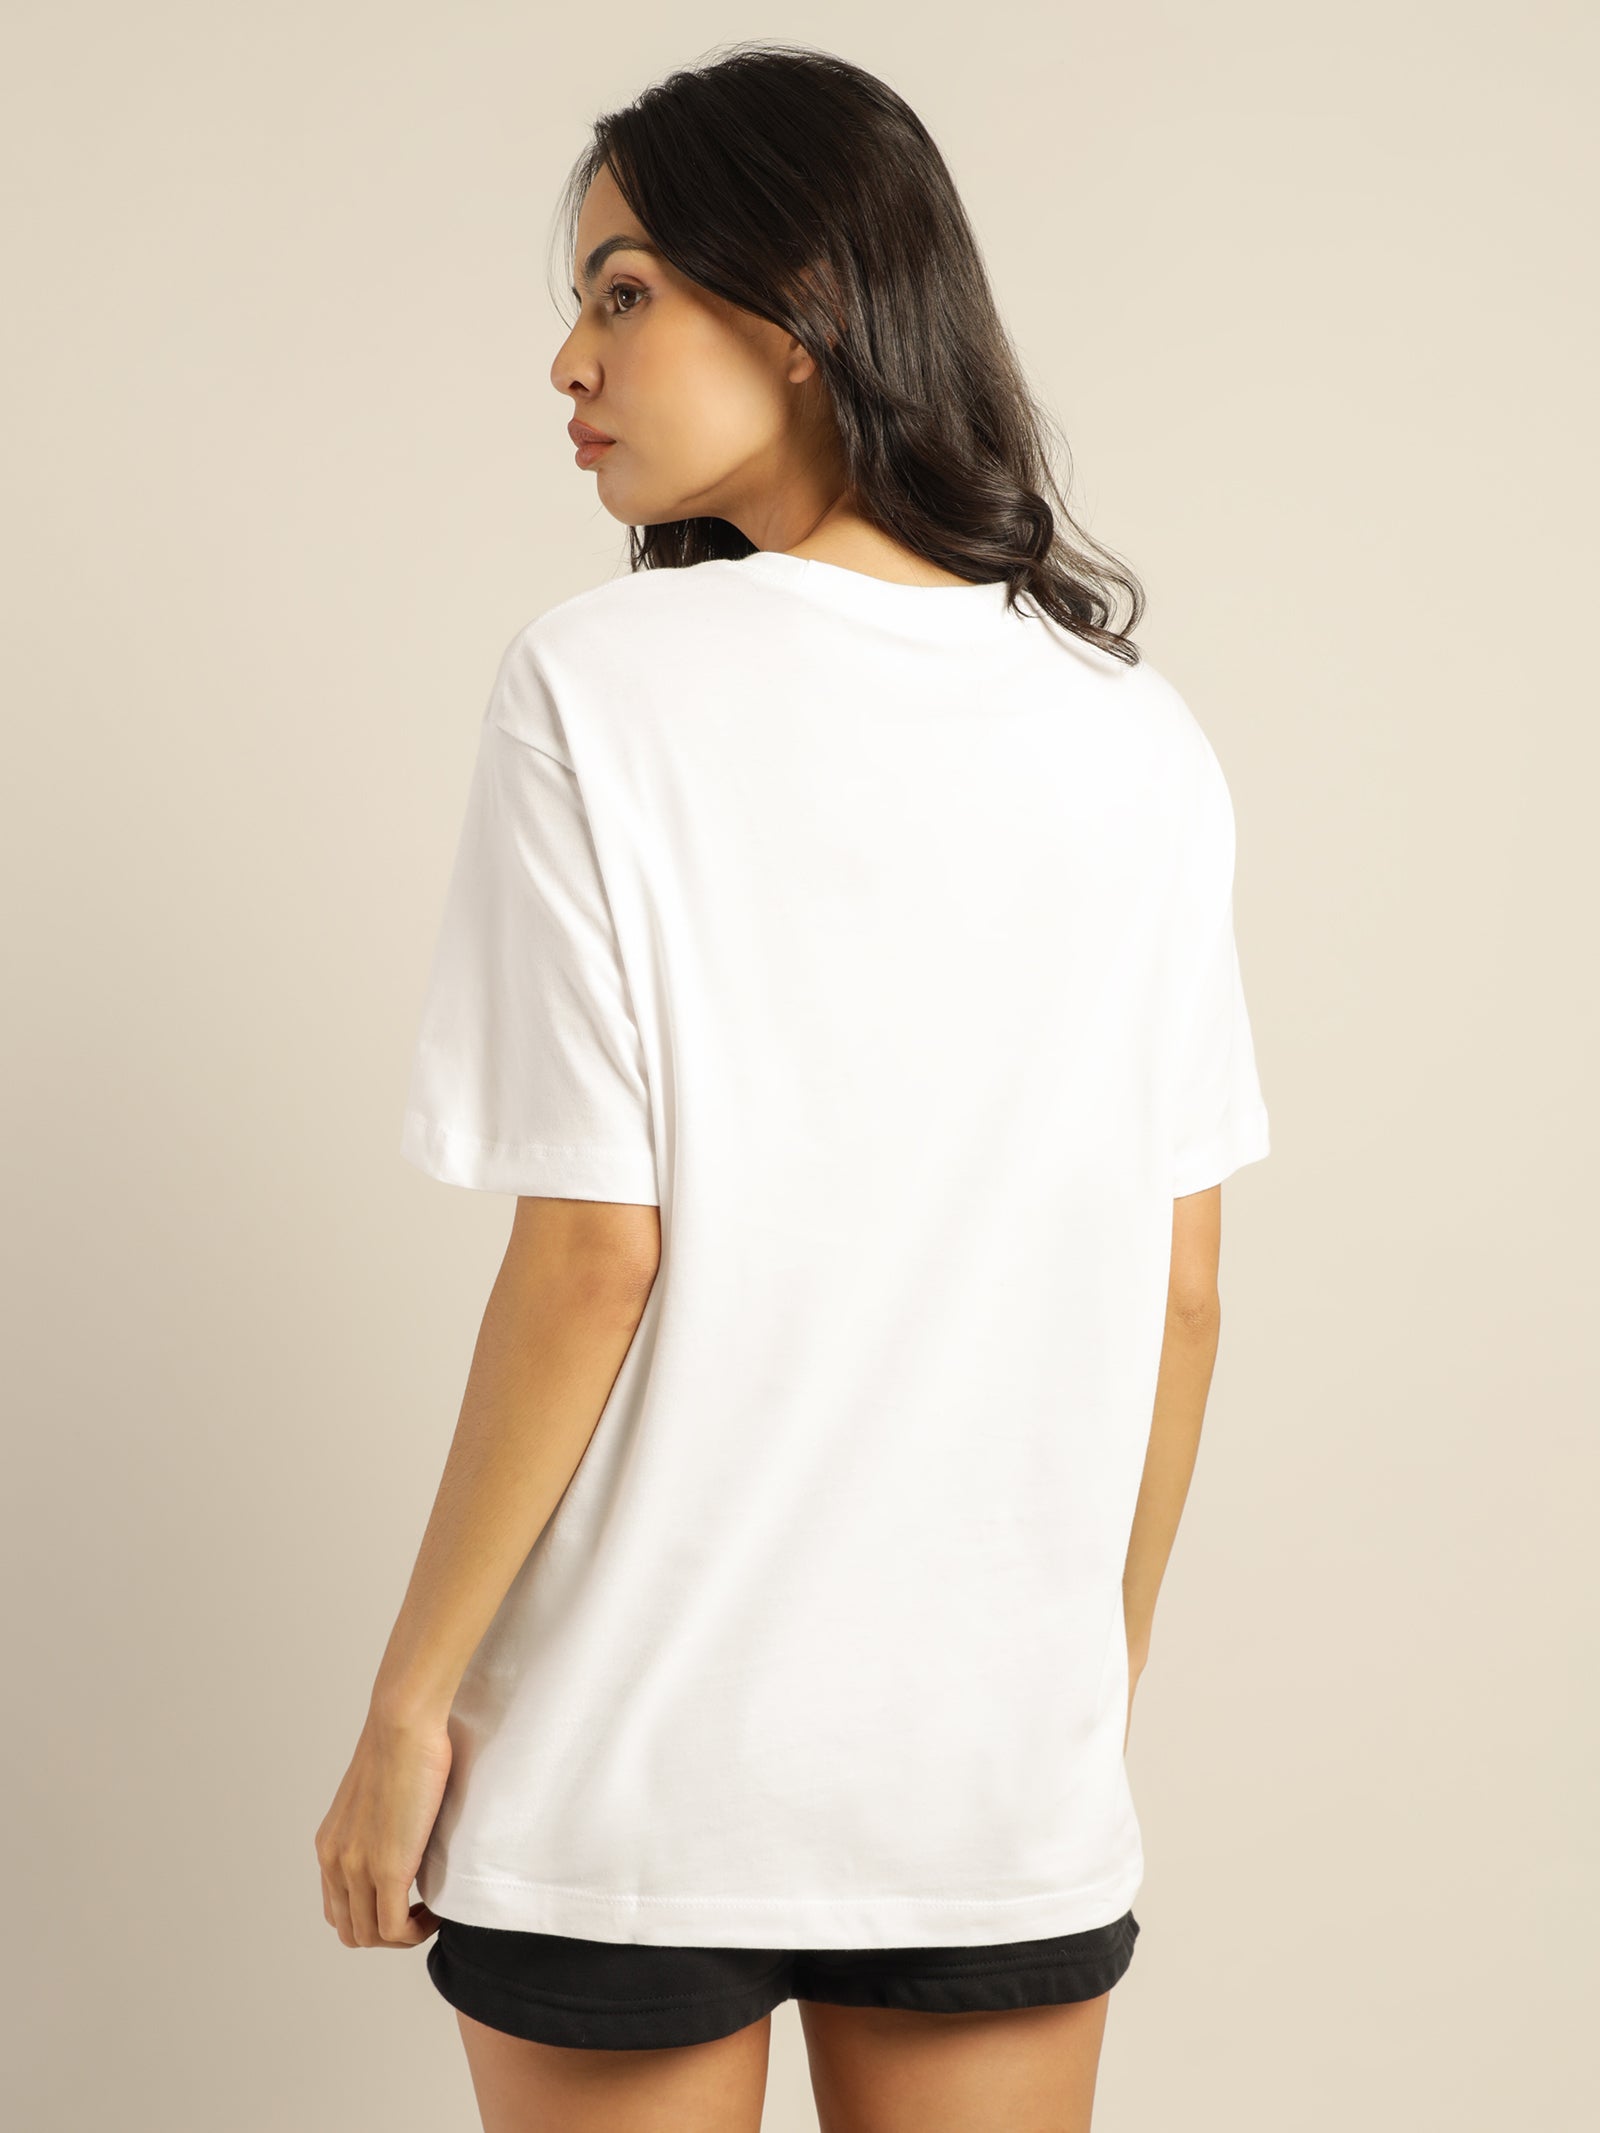 Buy Nike Sportswear OC 3 LS OS Women's T-Shirt - White